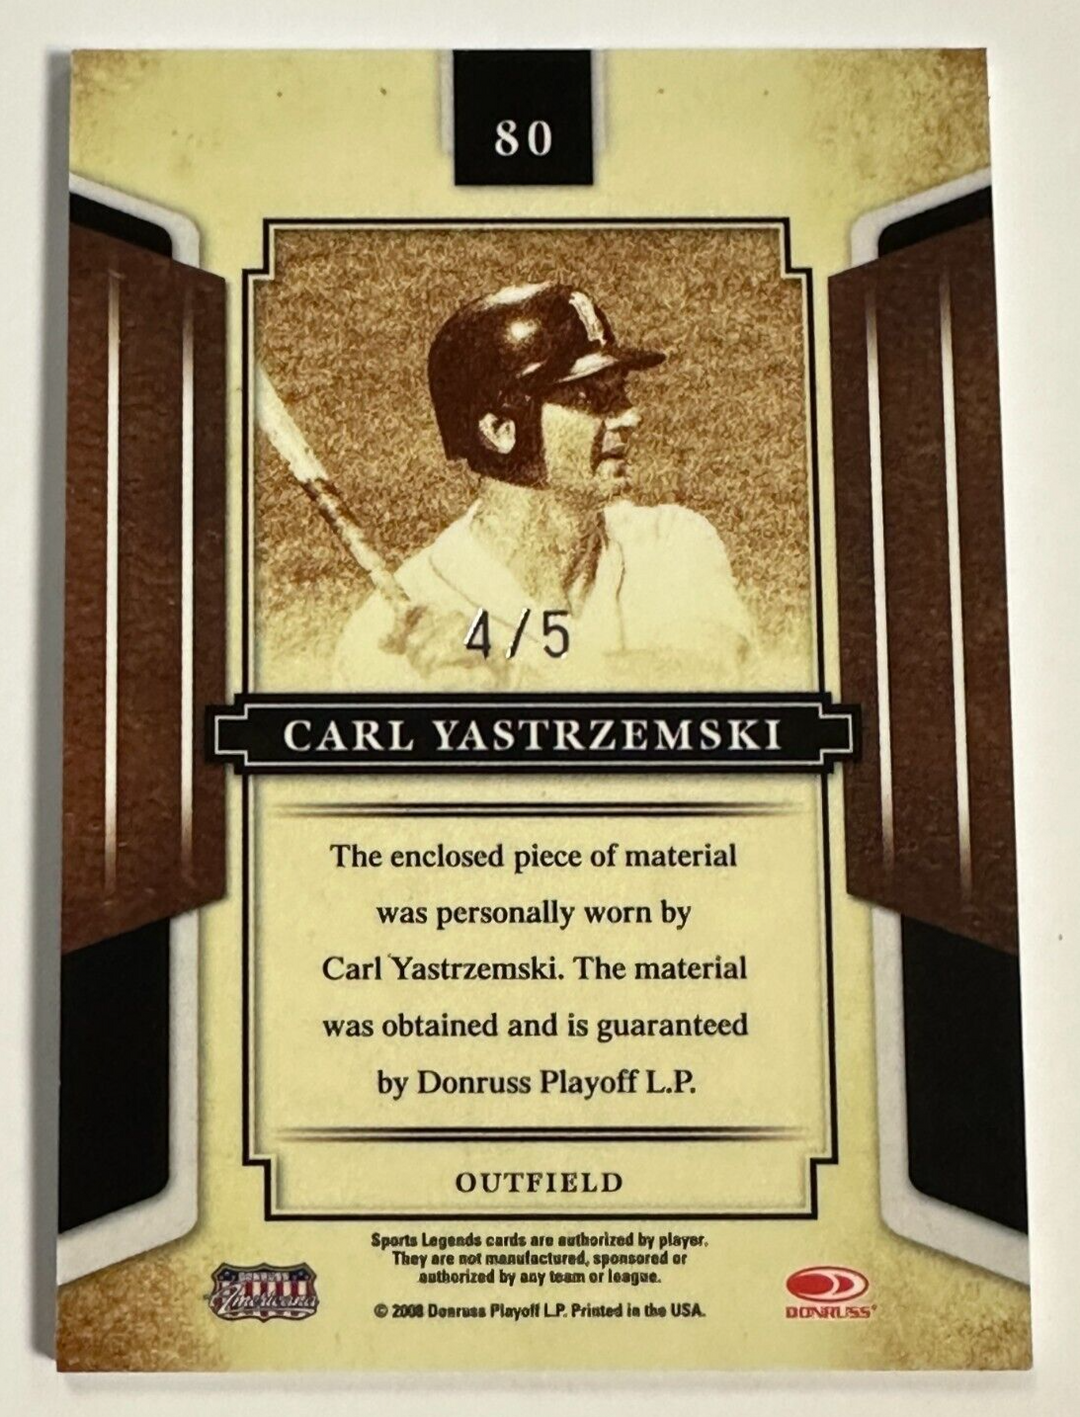 2008 Donruss Sports Legends Carl Yastrzemski Game Worn Jersey Card 4/5 Red Sox